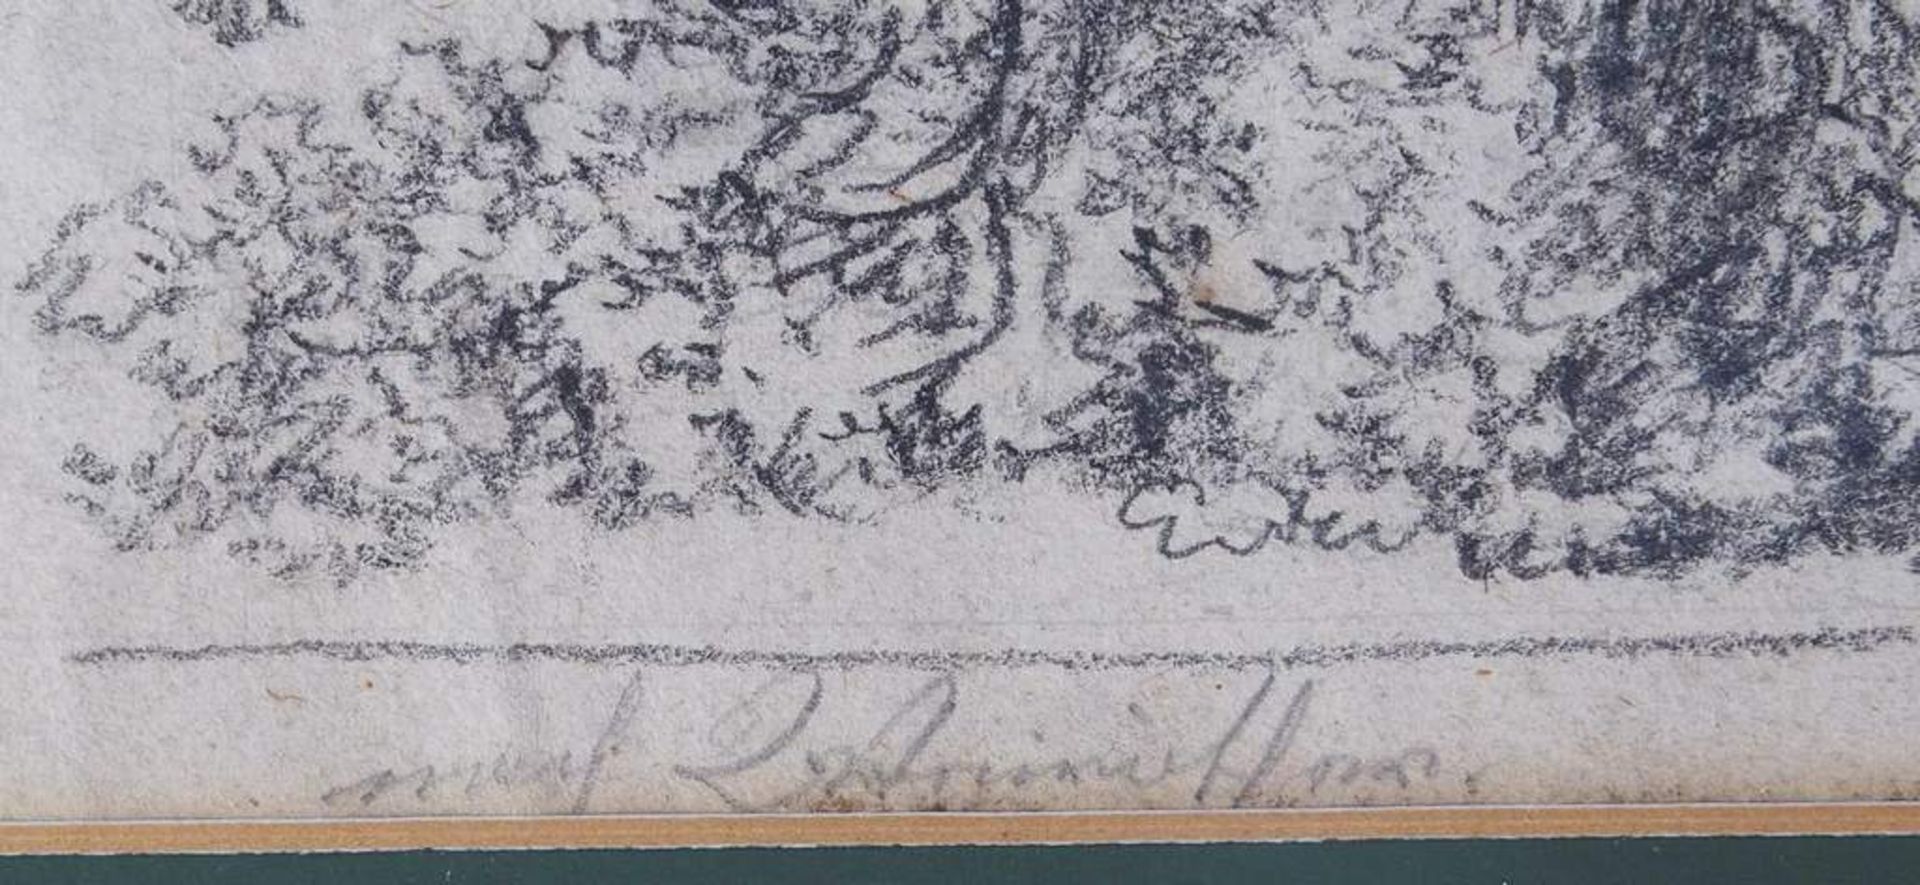 Paar Biedermeier-Handzeichnungen, datiert 1818.Paar Biedermeier-Handzeichnungen, datiert 1818. - Bild 6 aus 6